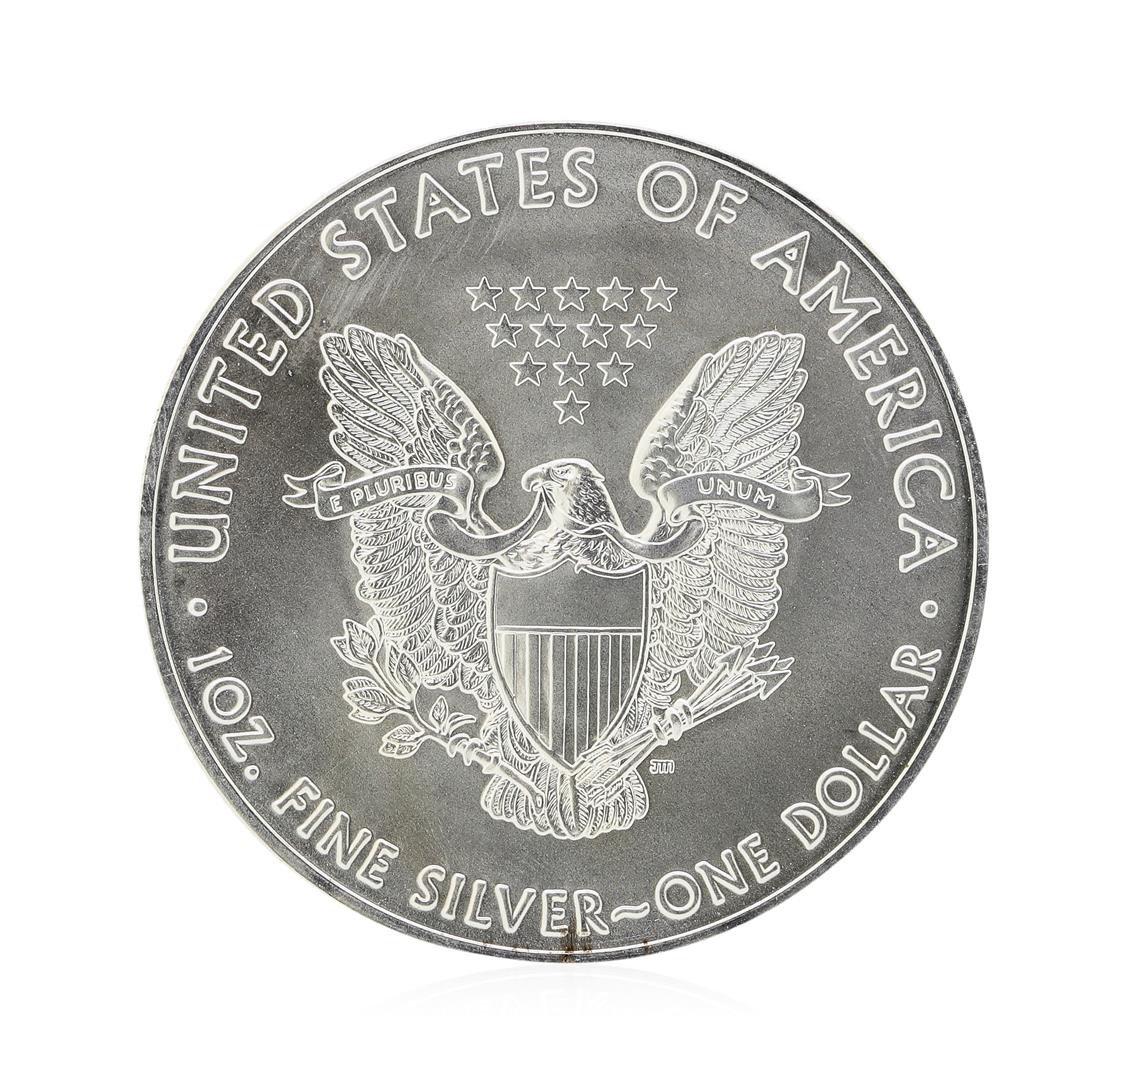 2017 American Silver Eagle Dollar Coin